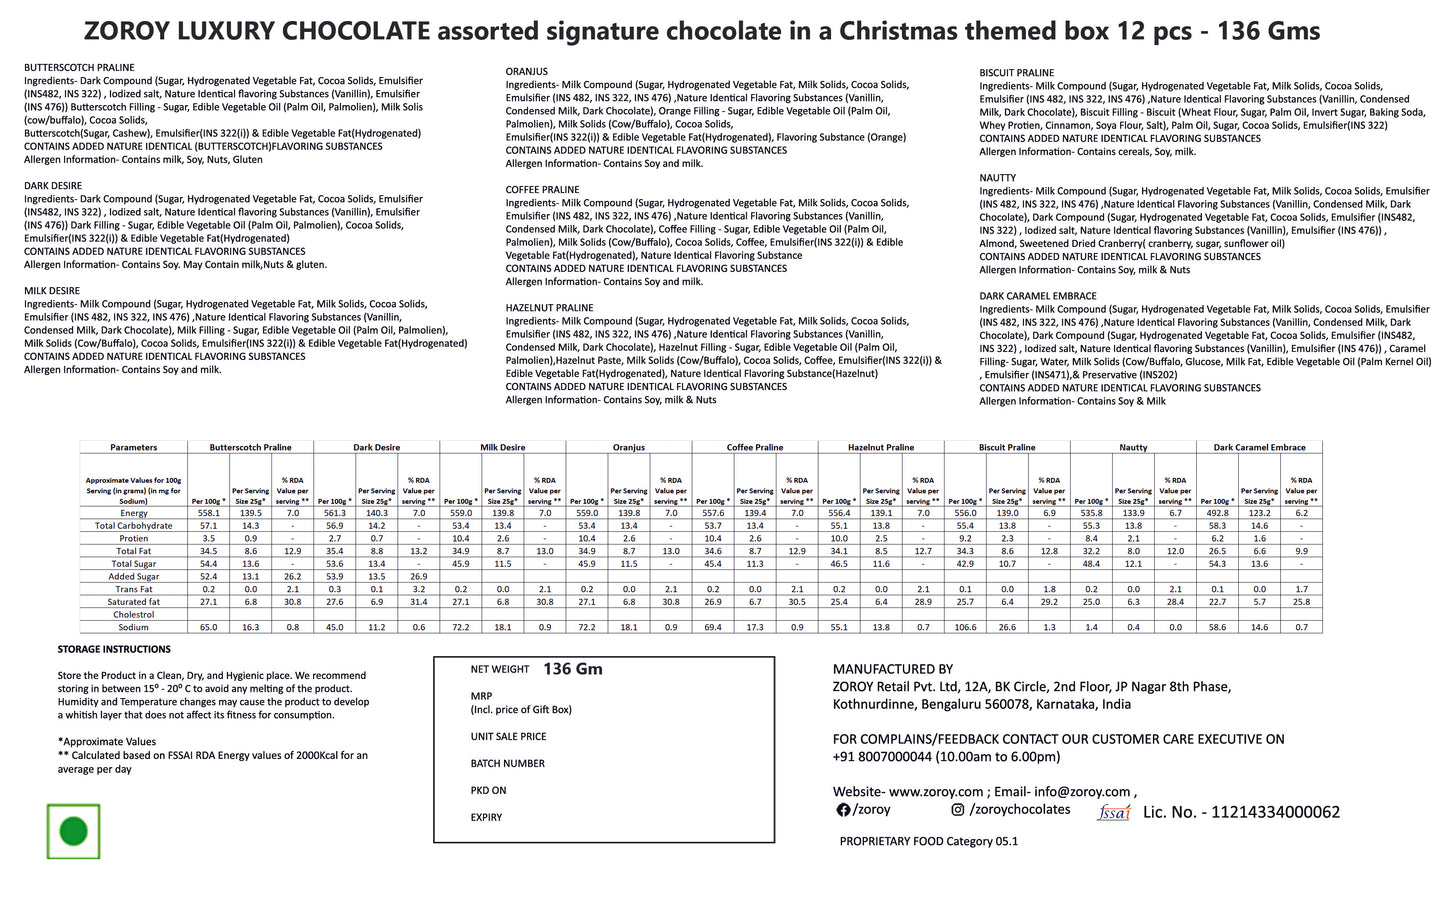 ZOROY Christmas Special 12 chocolate box